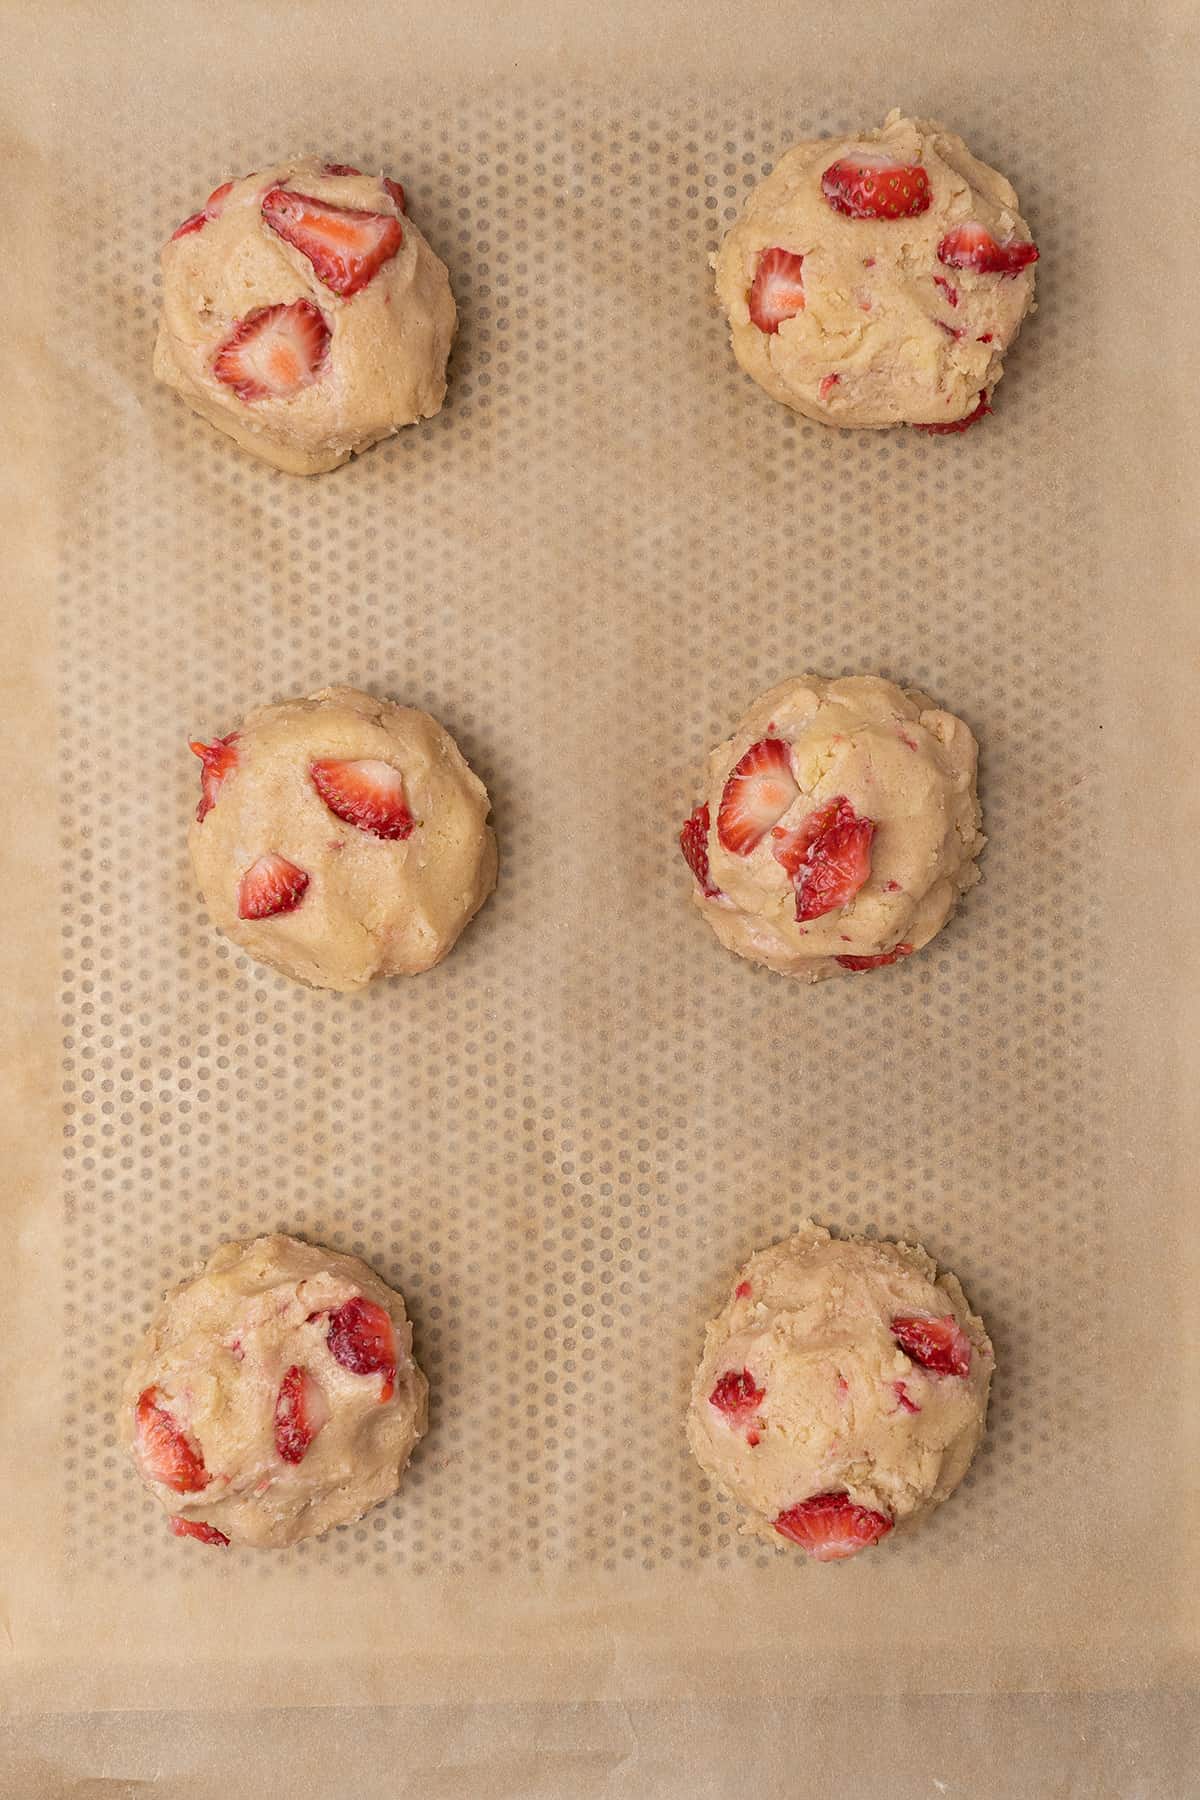 Strawberry cheesecake cookies before baking